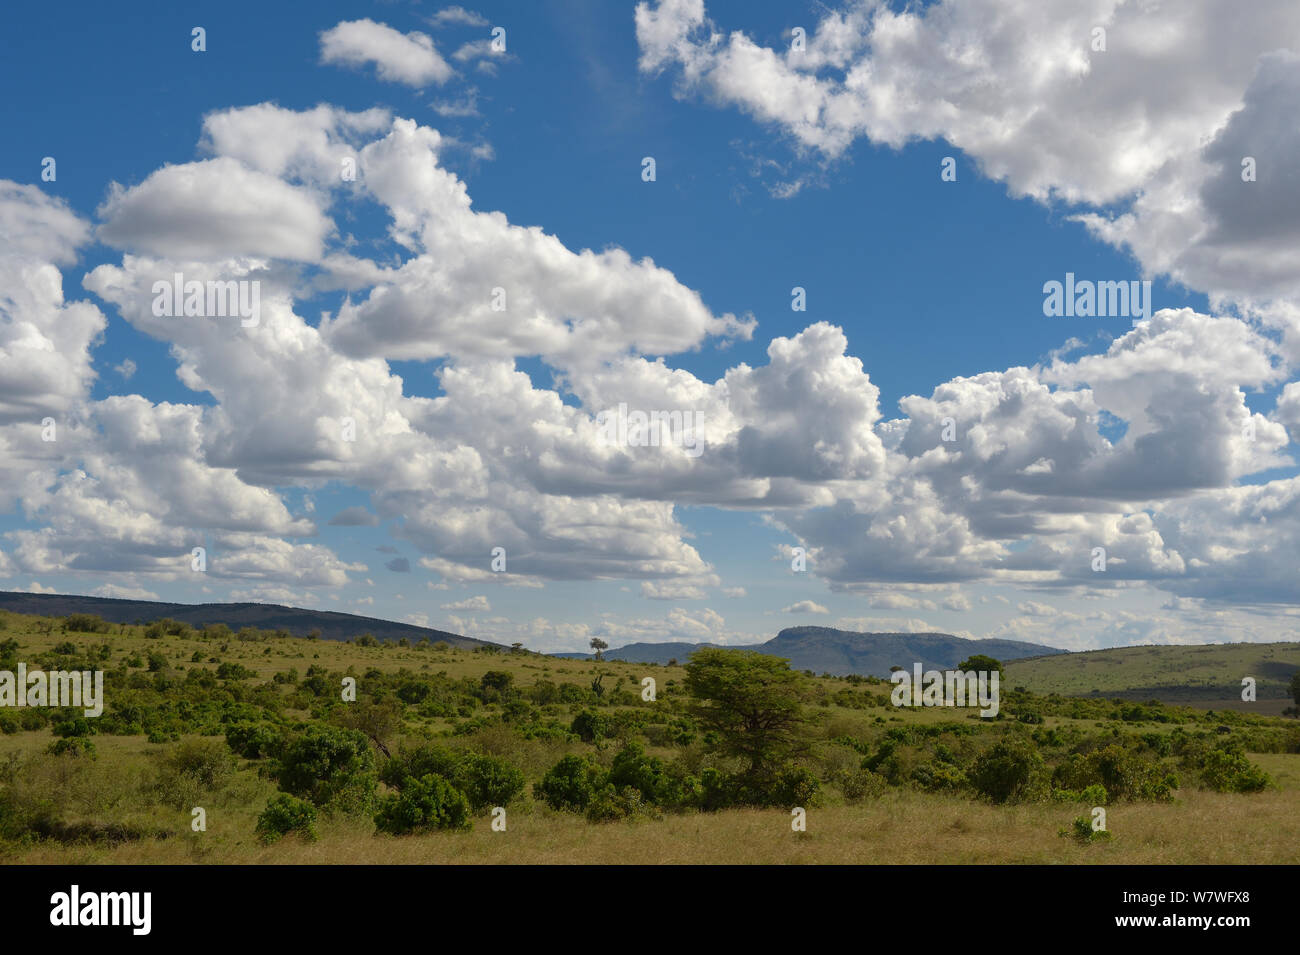 Savanna habitat with scattered clouds, Samburu, Kenya,October 2013. Stock Photo